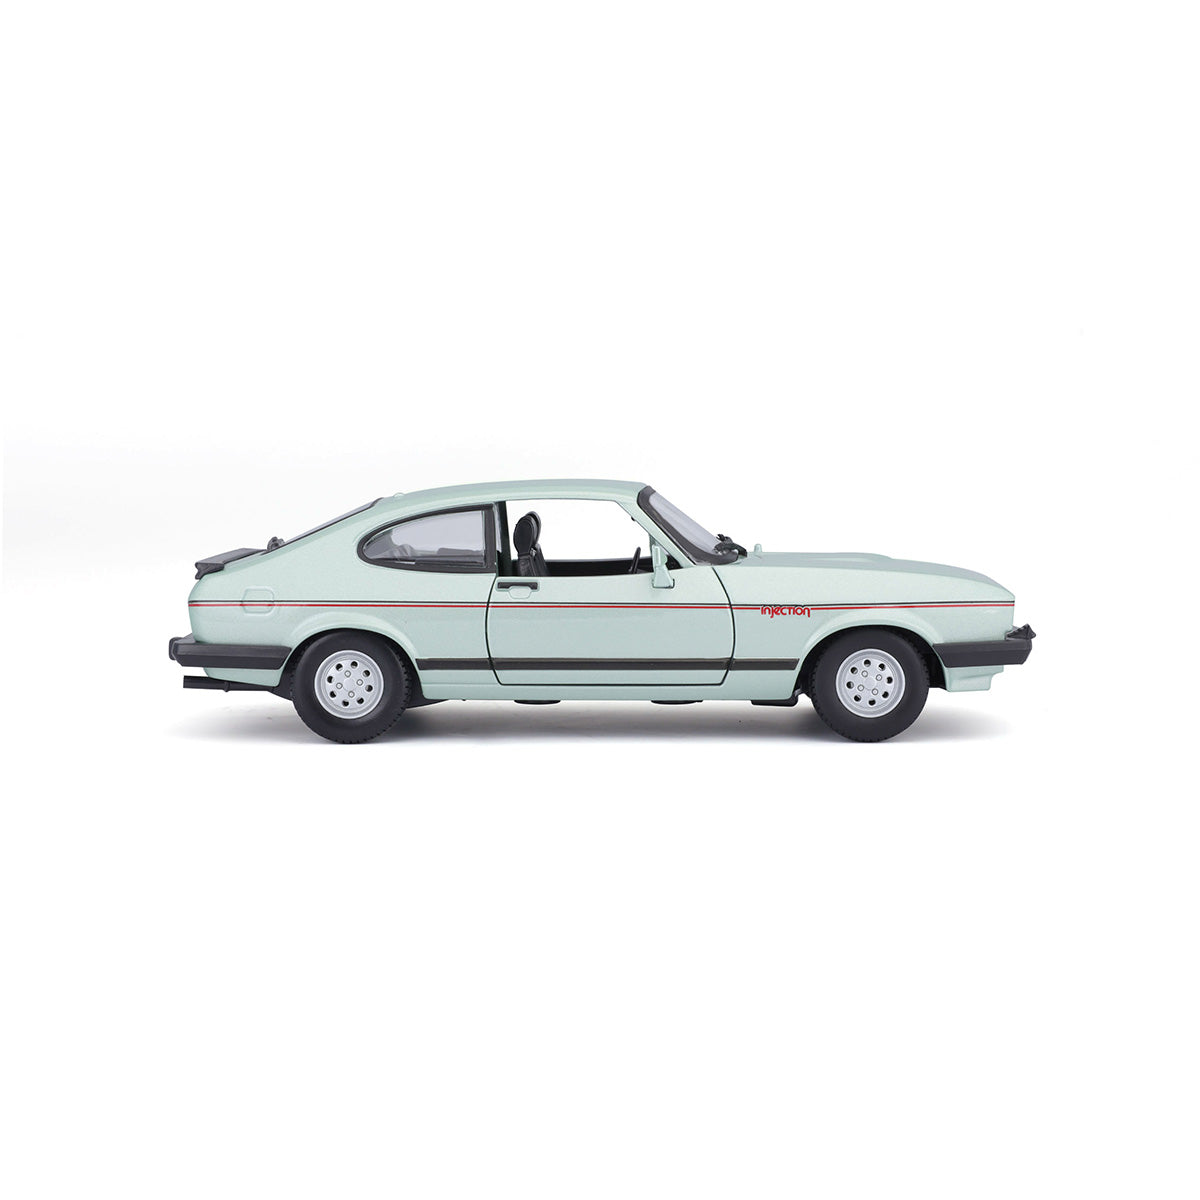 18-21093 GN - Bburago - 1:24 - Ford Capri (1982) -  Verde chiaro